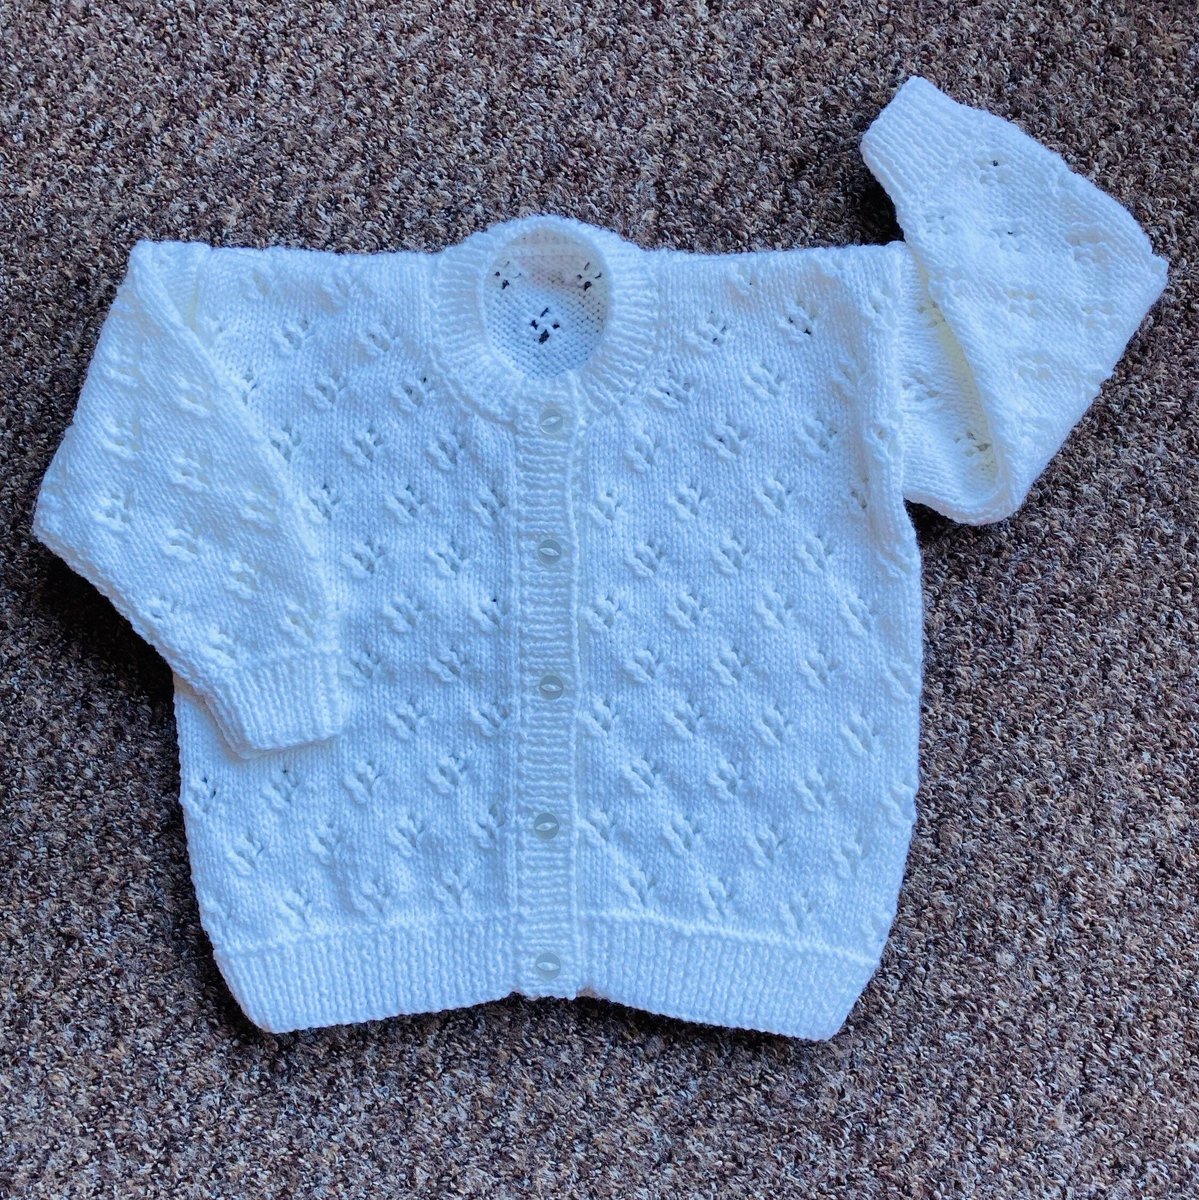 🌷🌸Wrap your baby up nice and snug with this pretty #handmade #baby cardigan.🌼🌻 bitzas.etsy.com/listing/217546… #firsttmaster #atsocialmedia #UKHashtags #northwestUK #MHHSBD